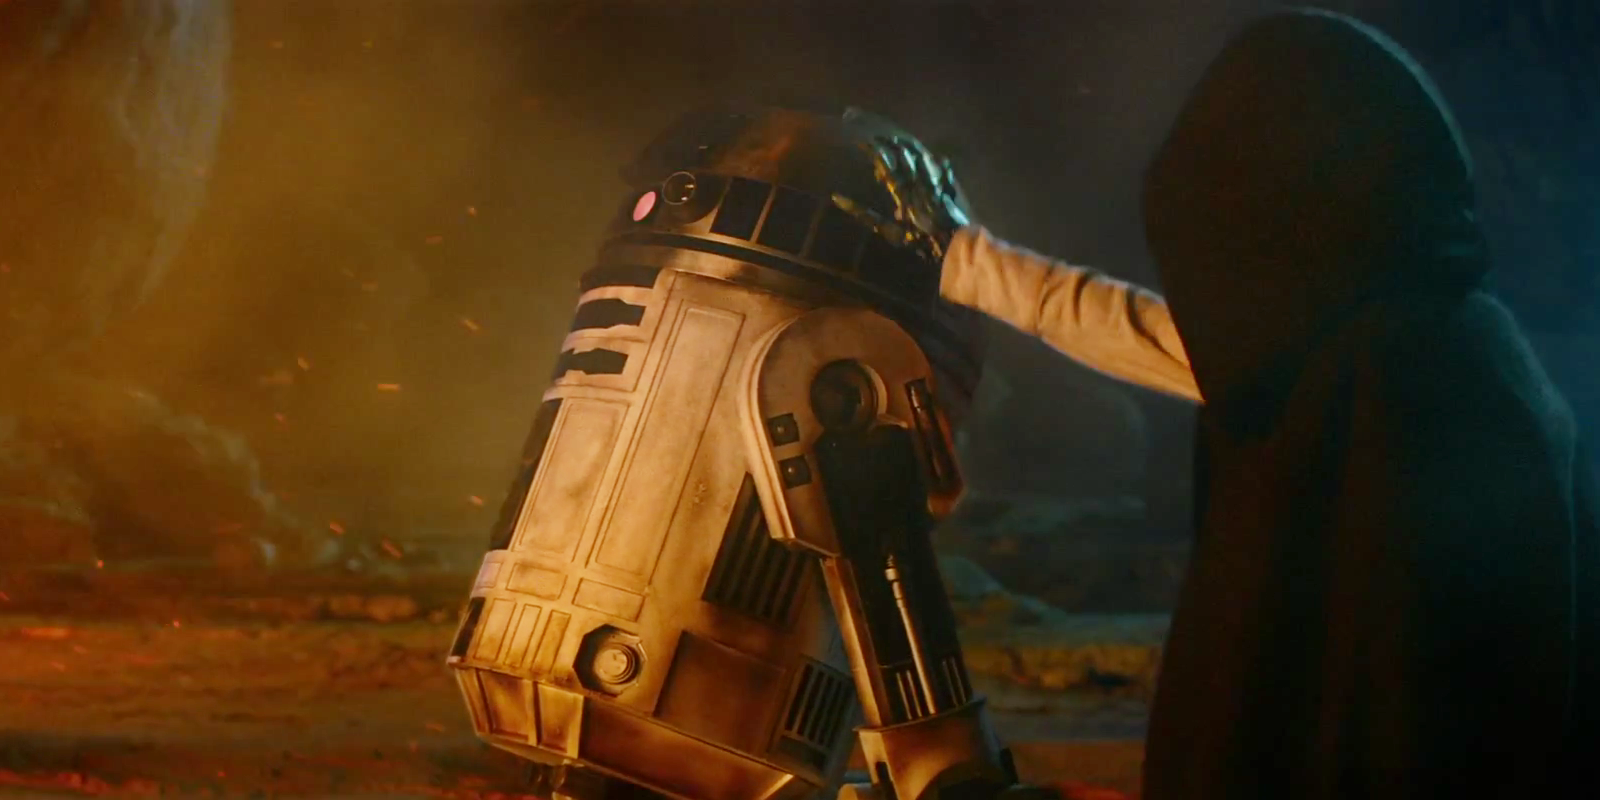 R2-D2 and Luke Skywalker in The Force Awakens